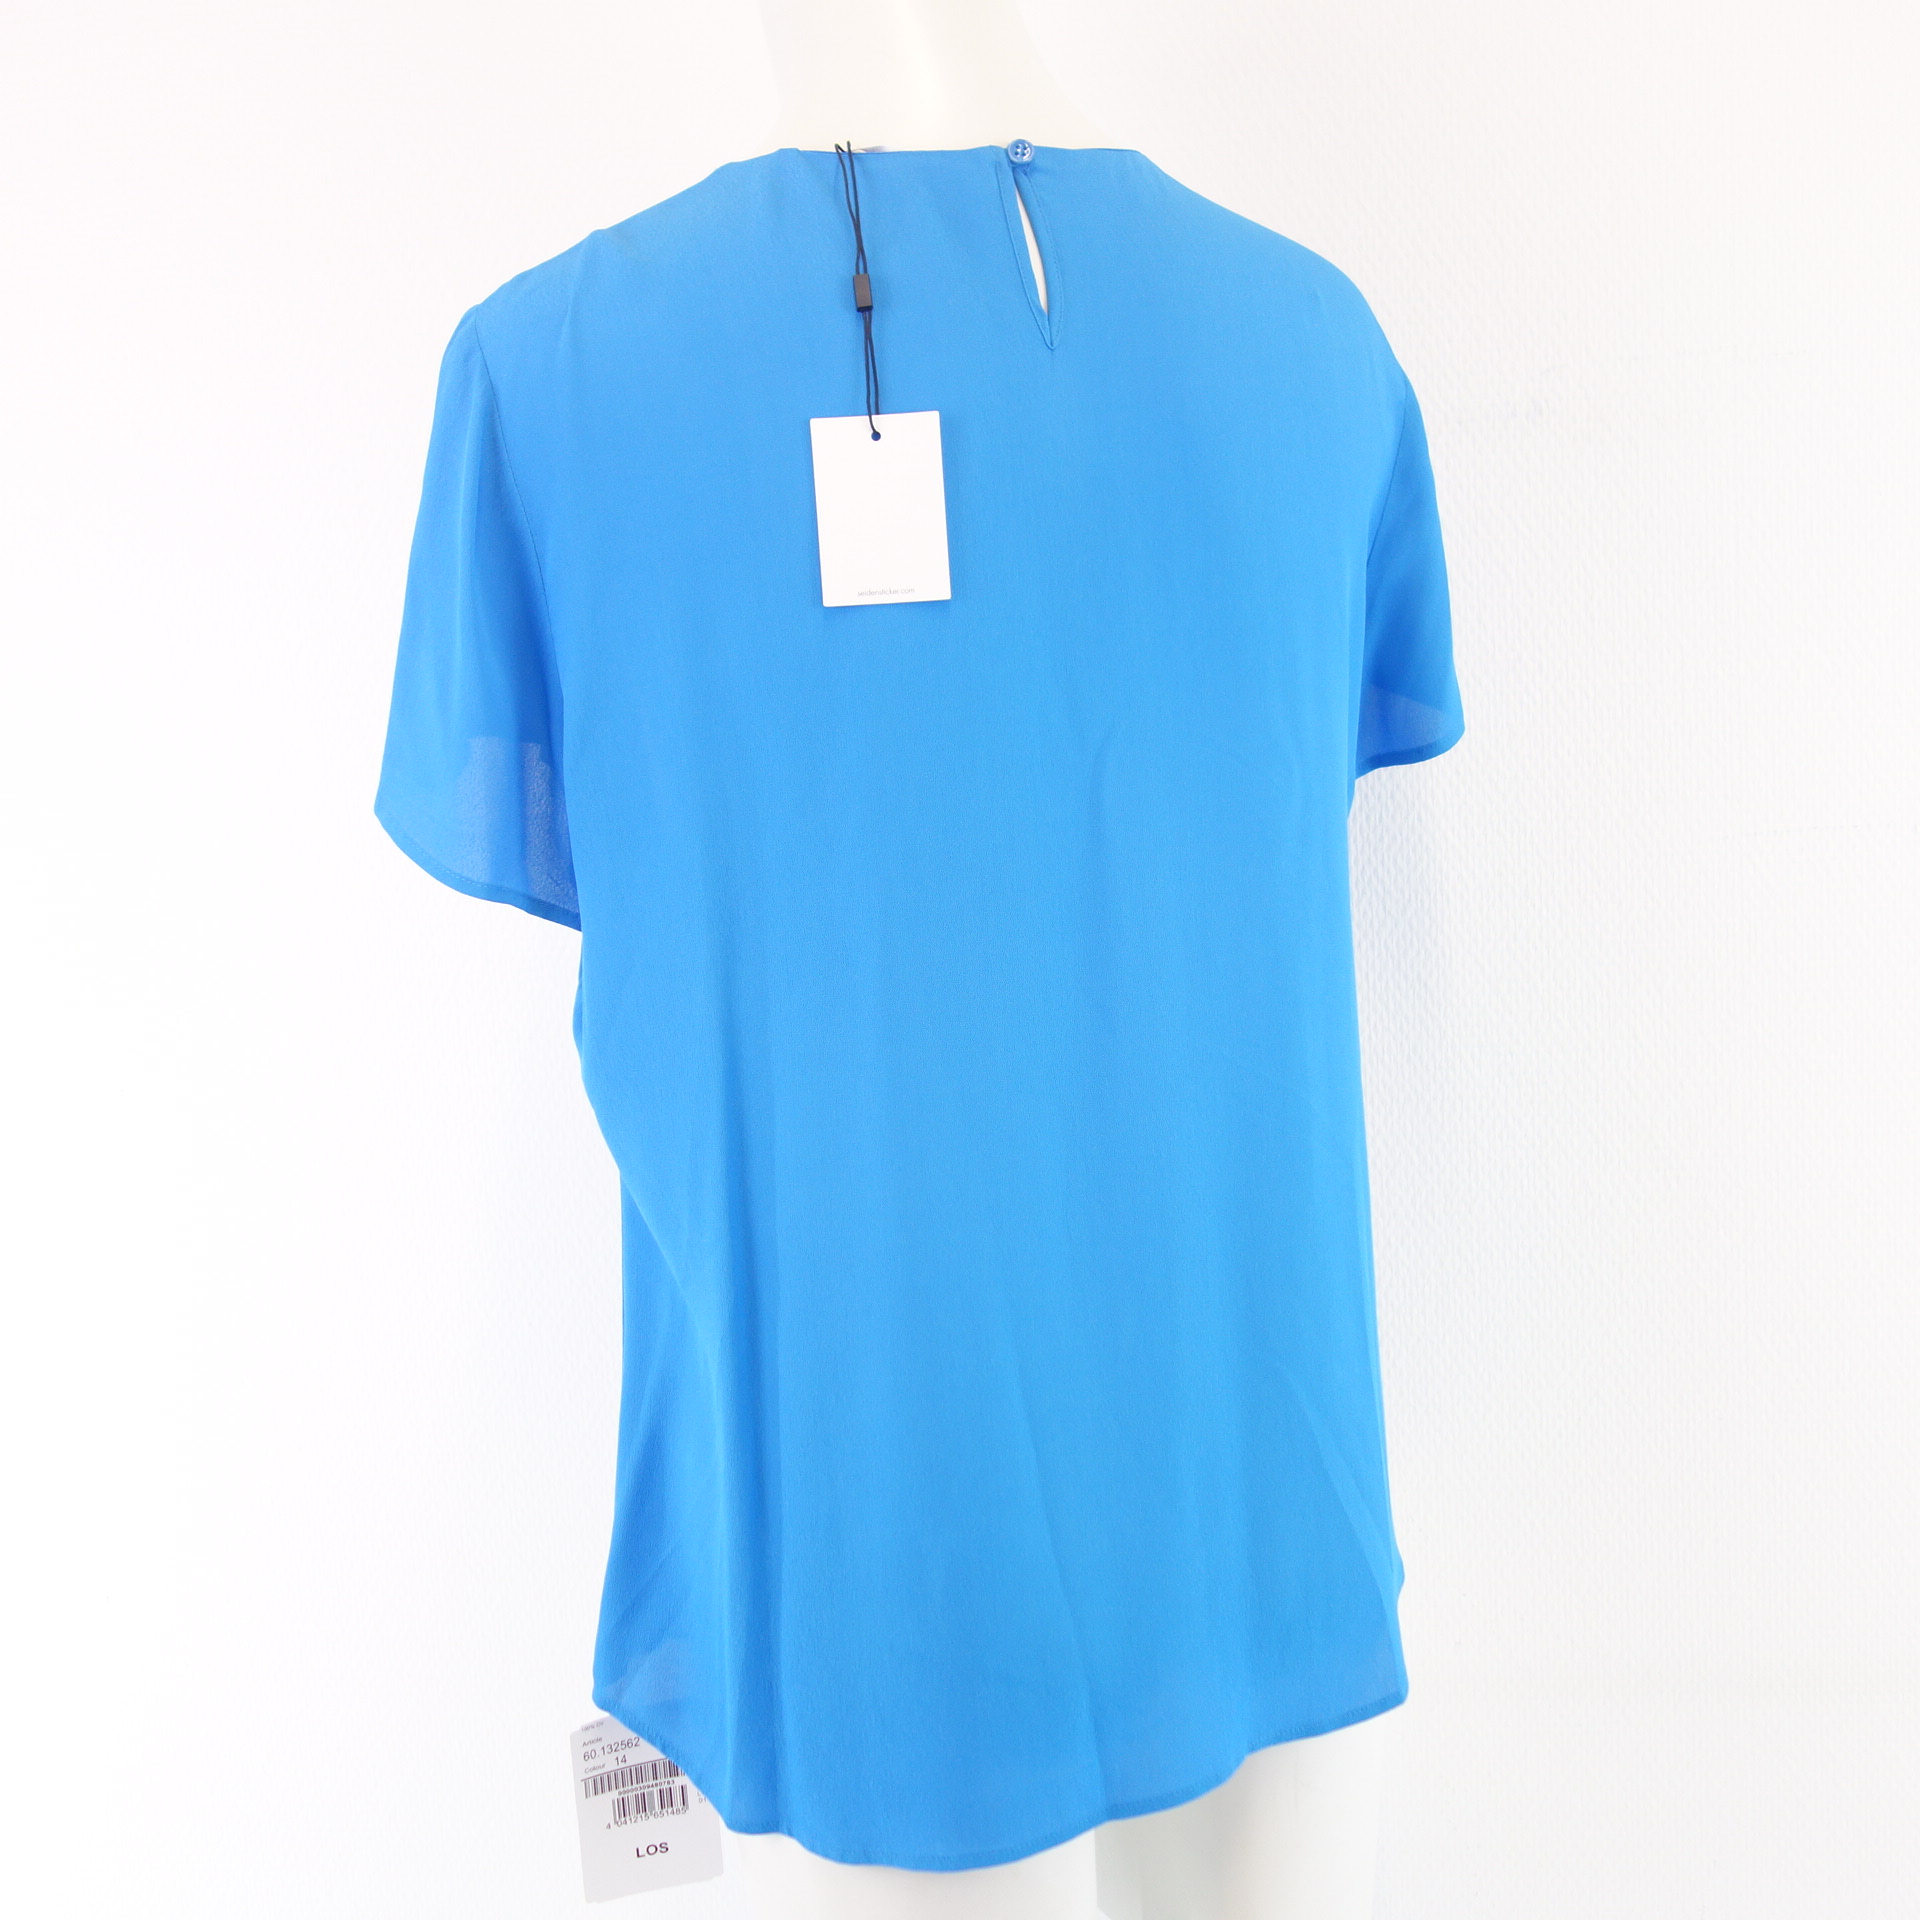 SEIDENSTICKER Damen Sommer Bluse Shirt Tunika Top Blau 100% Viskose 